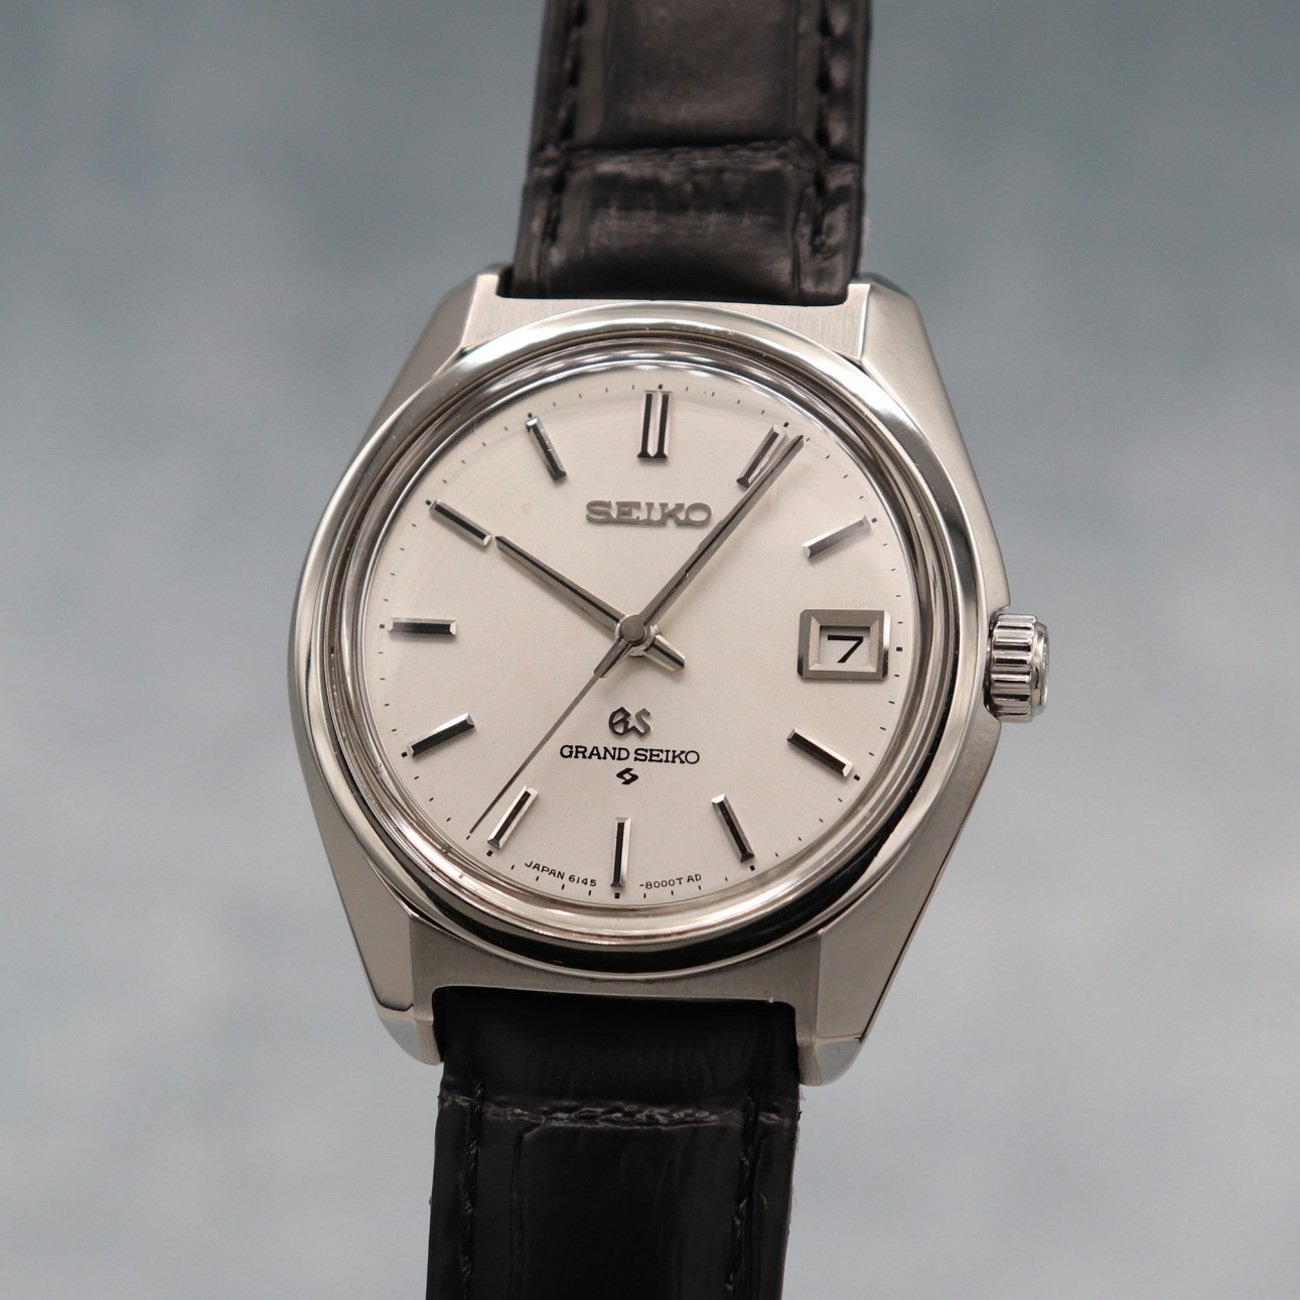 Grand Seikoグランドセイコー6145-8000 61GS 1968年製 - 腕時計(アナログ)